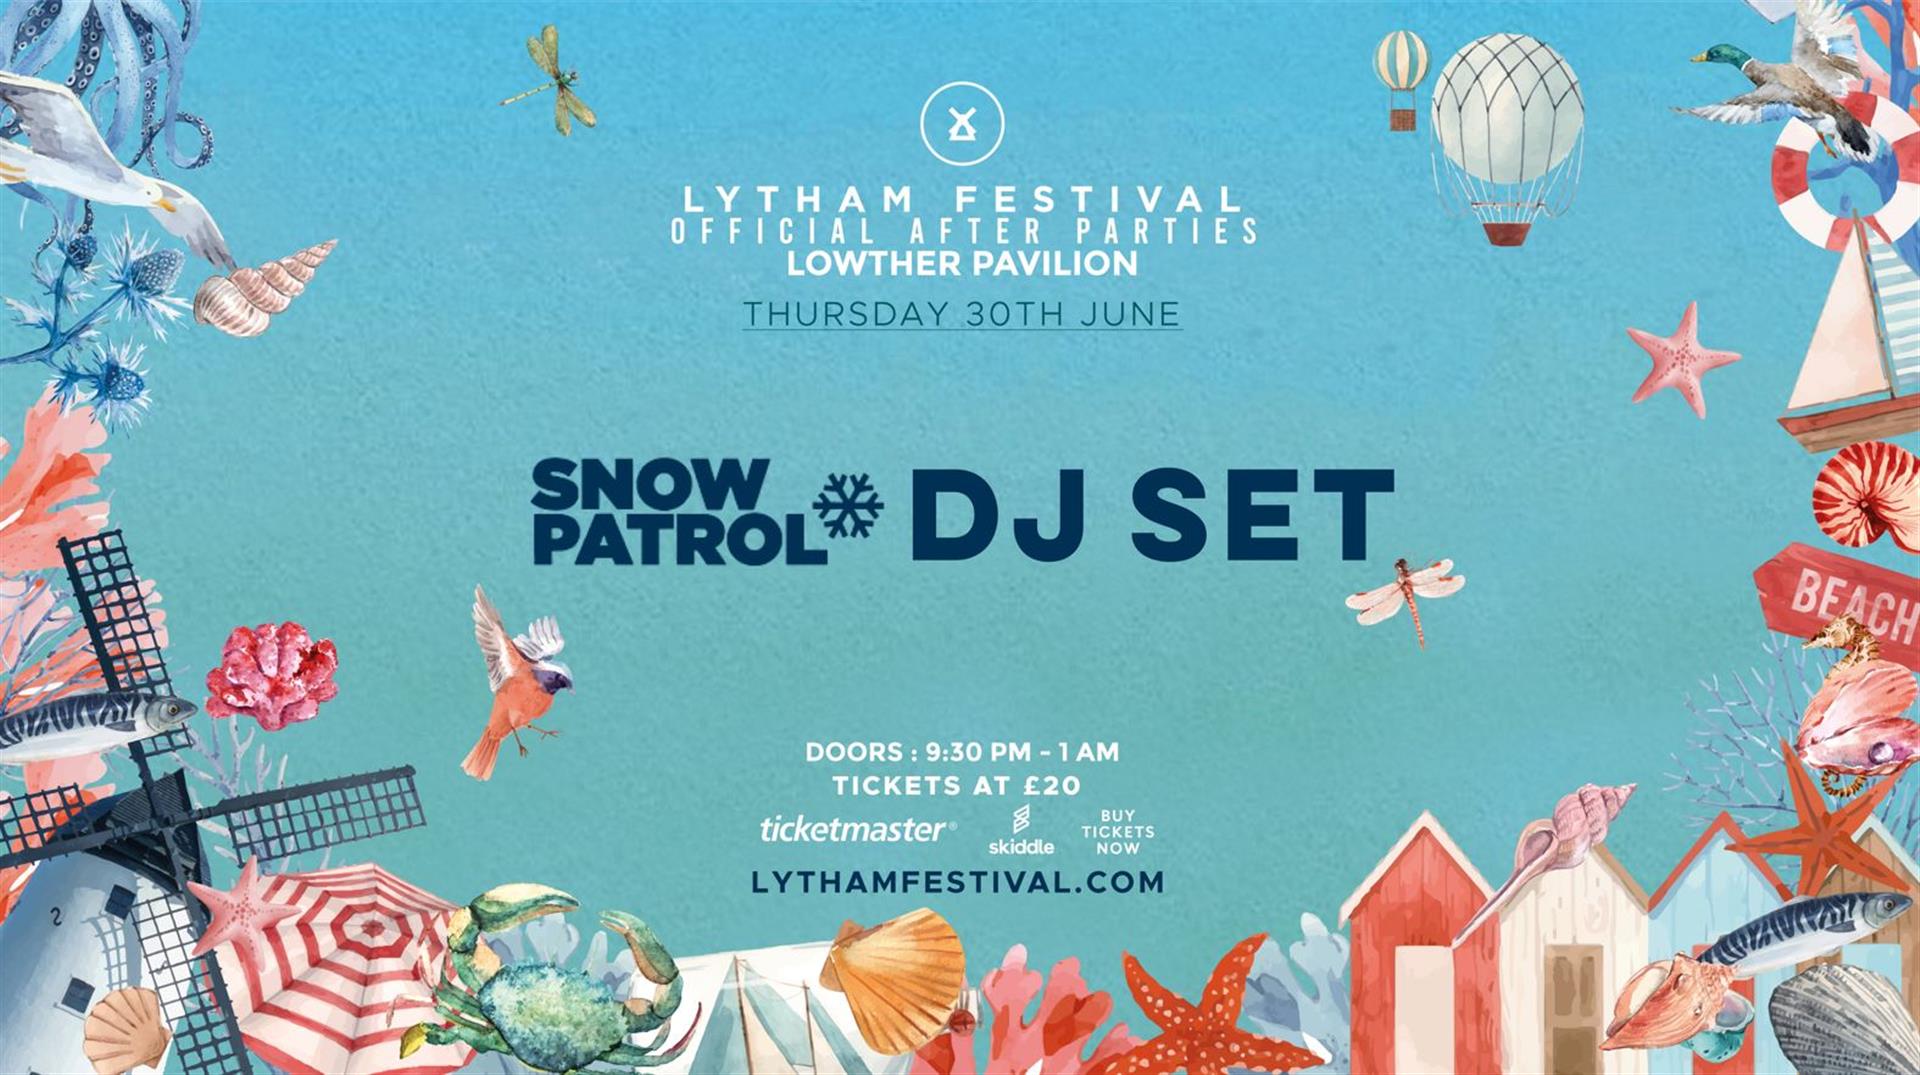 Lytham Festival Official After Parties – Snow Patrol DJ Set - Lowther Pavilion